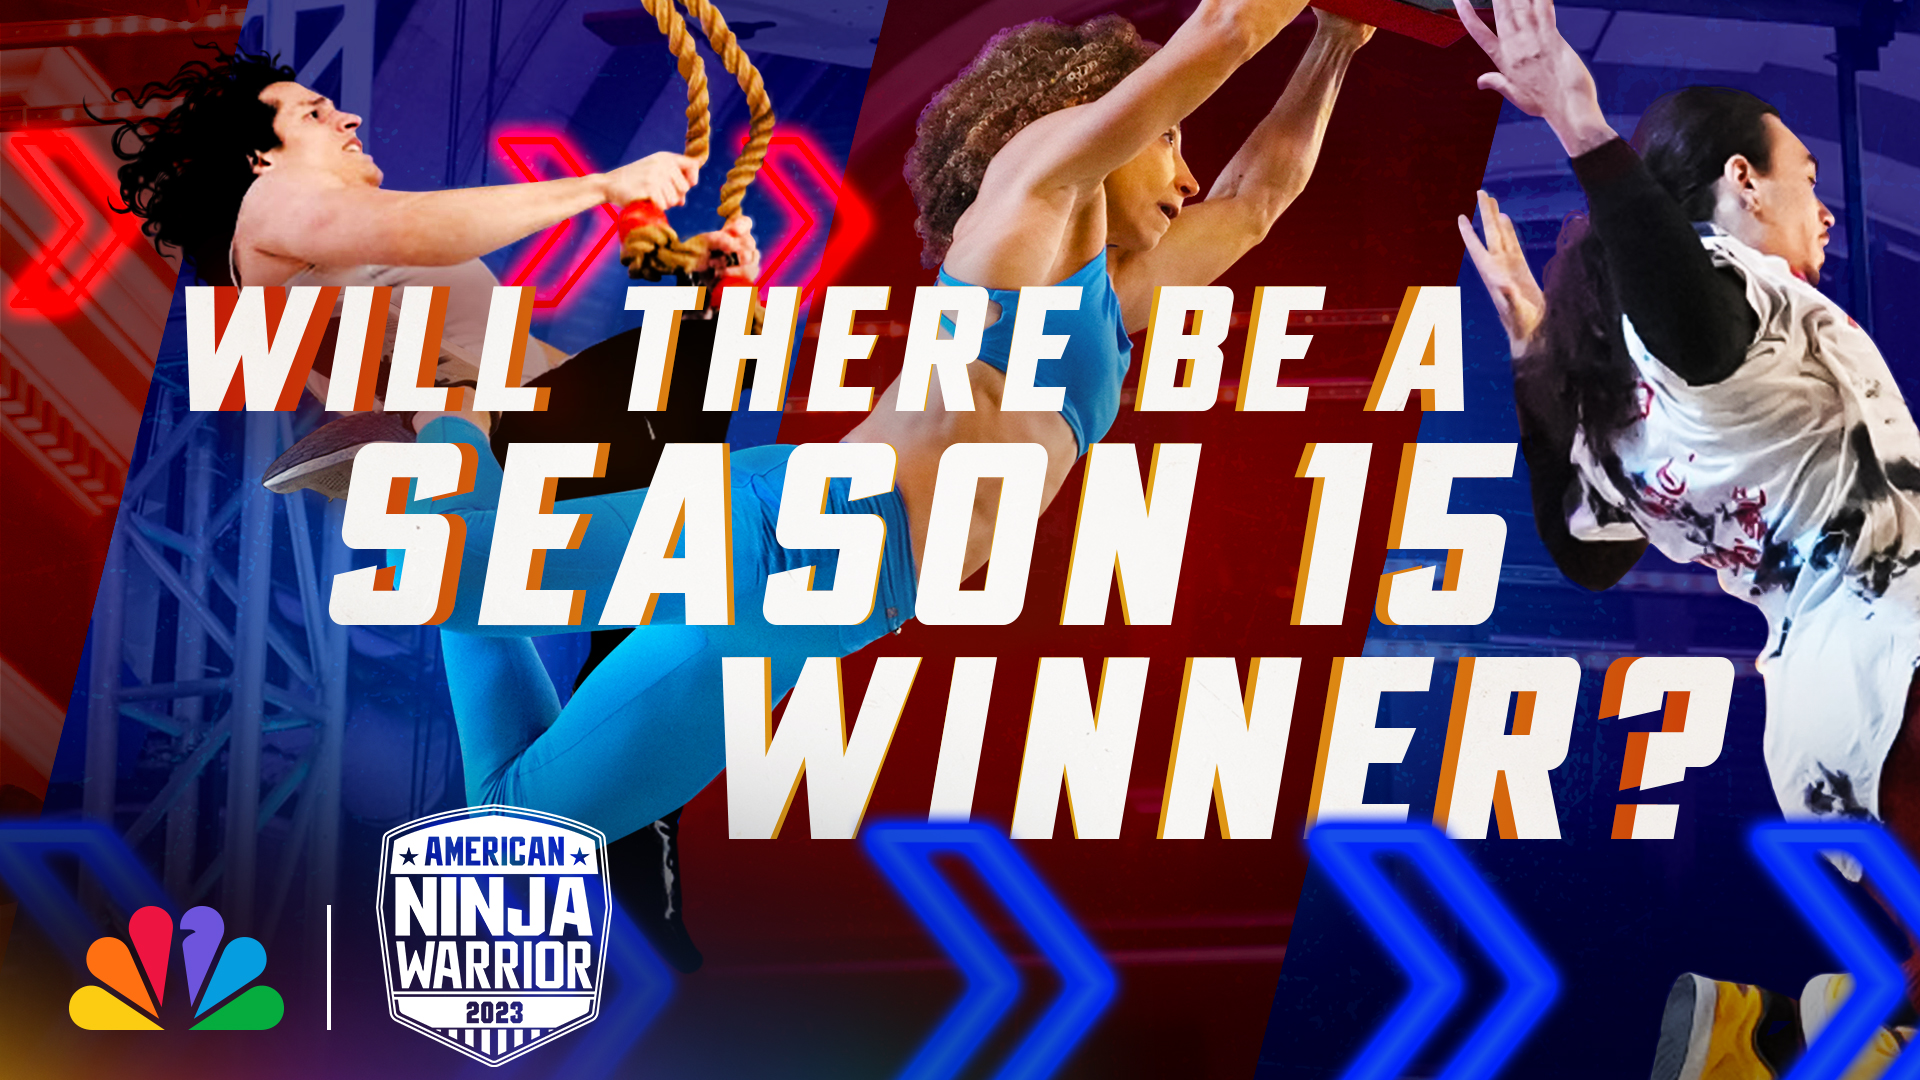 American Ninja Warrior Season 15 Episode 4 Release Date & Time